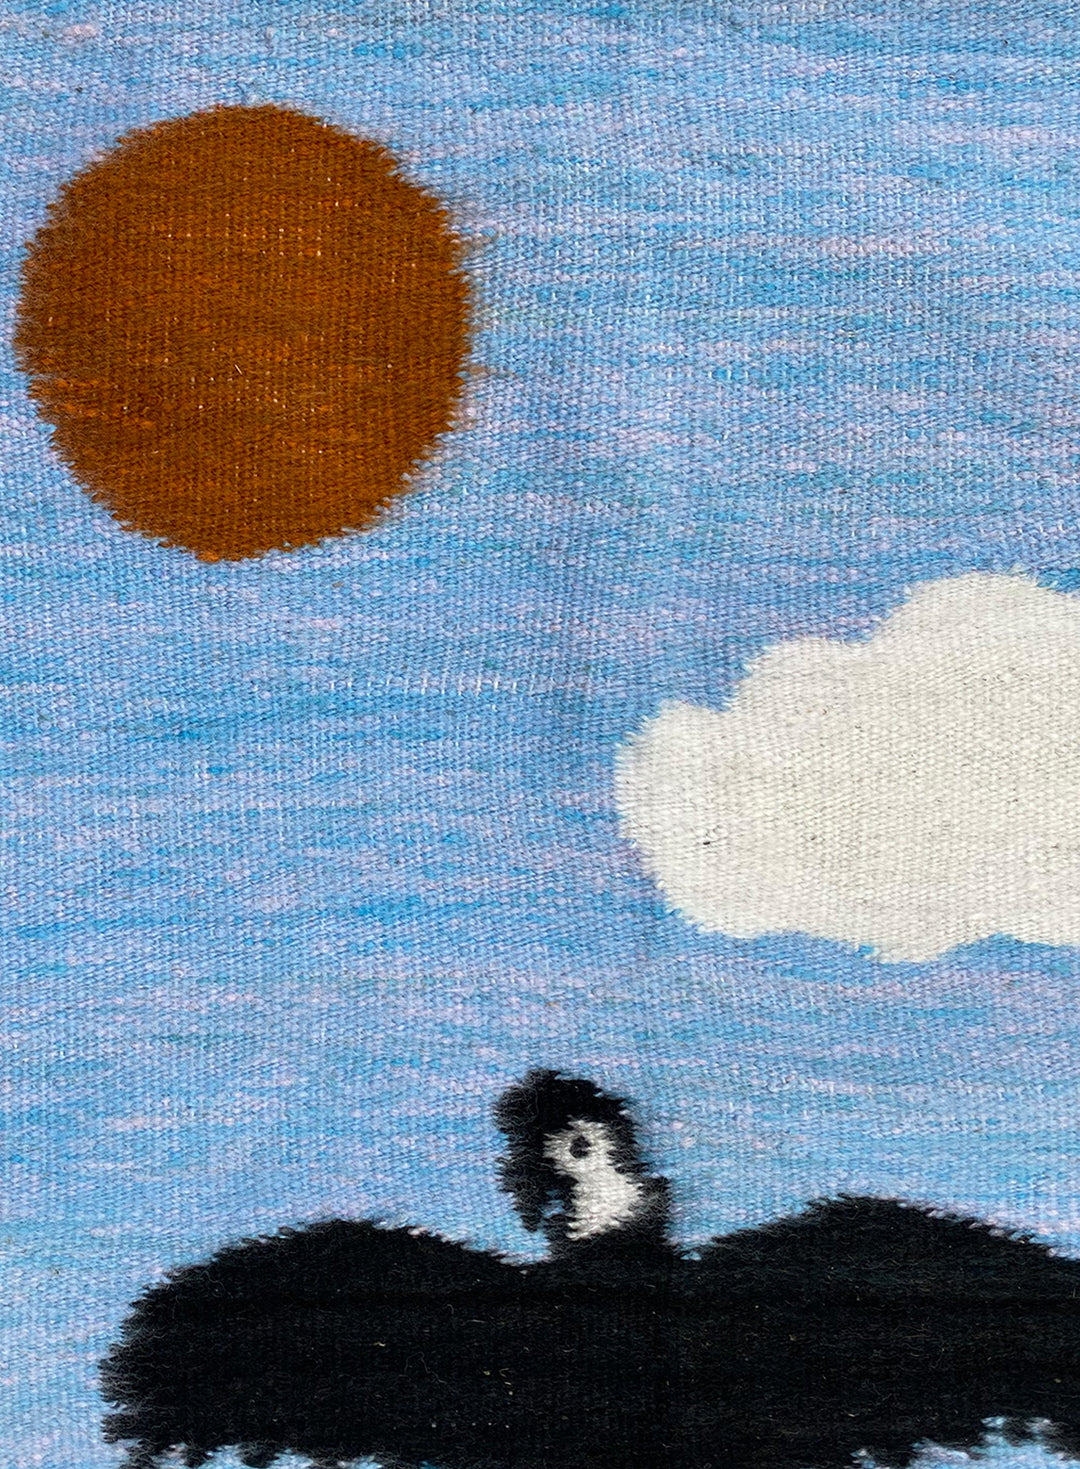 The Condor Tapestry in Sky-blue